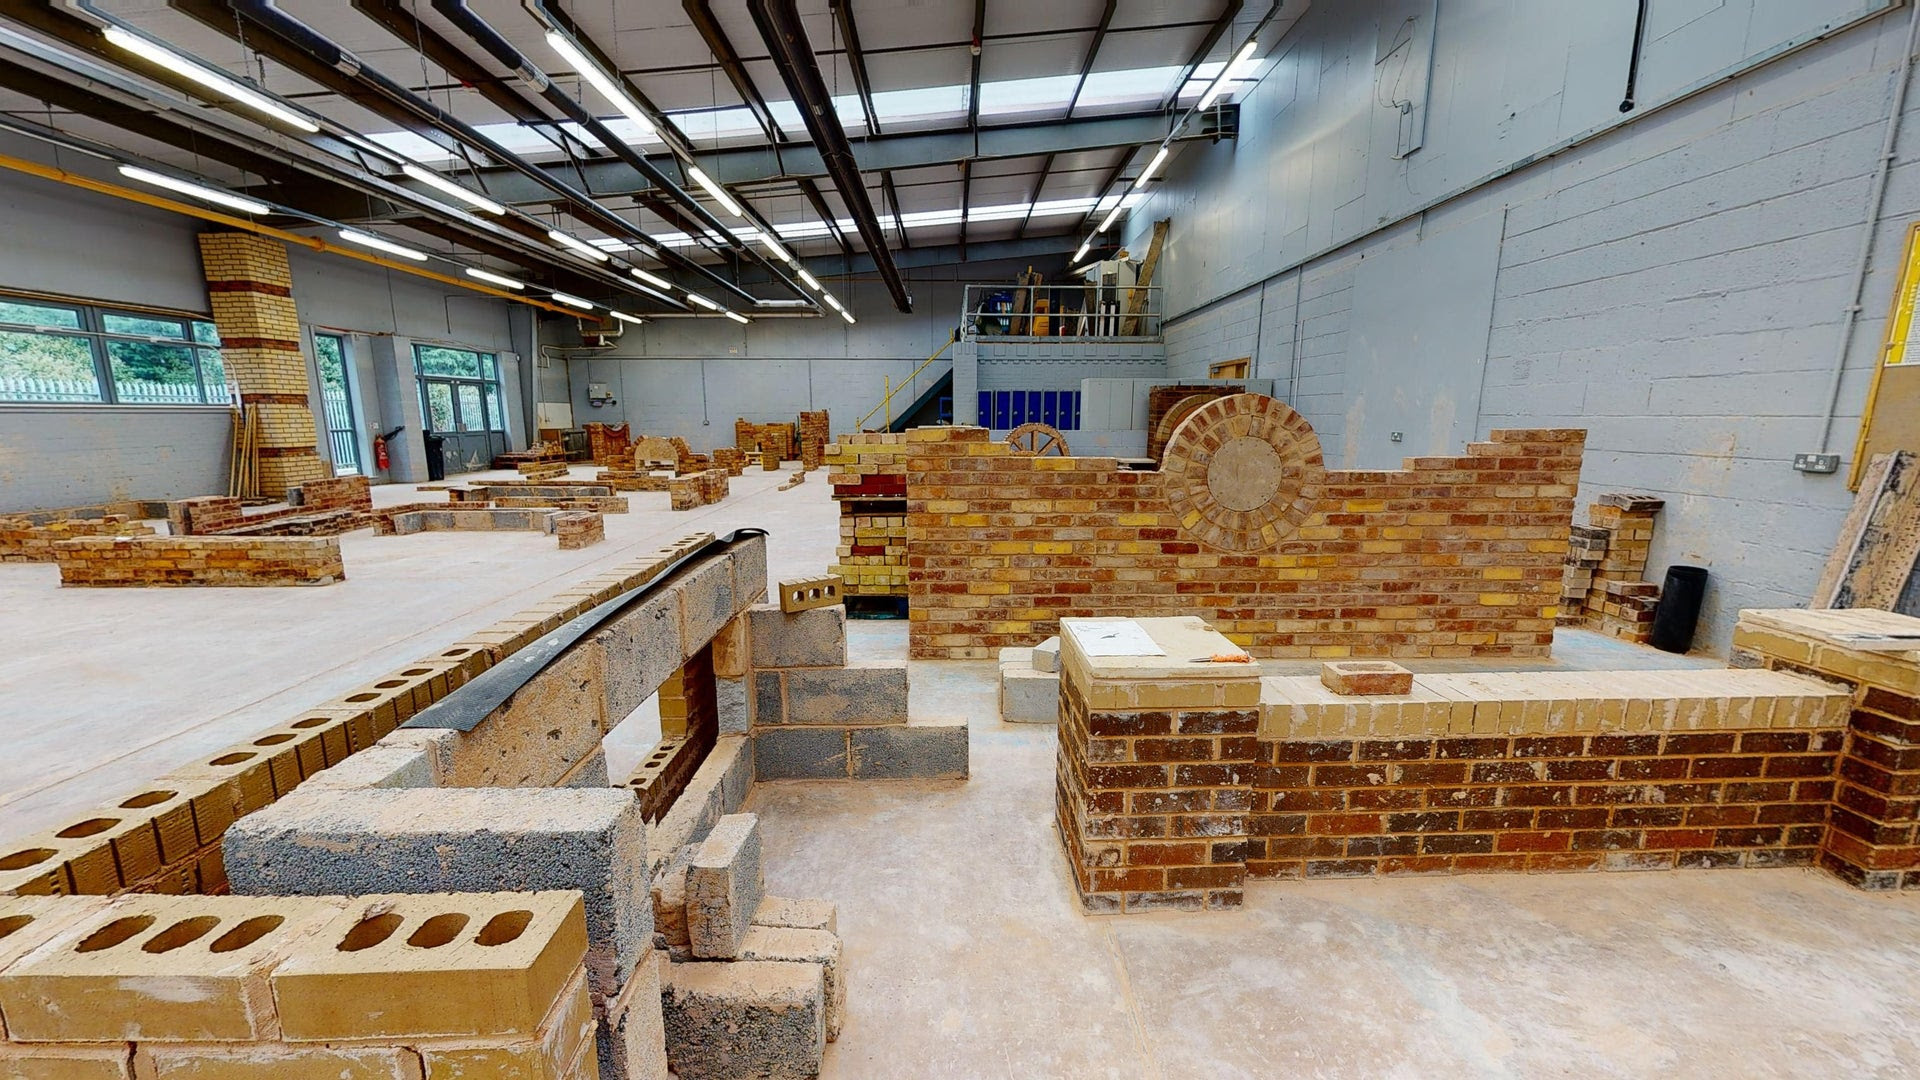 Brickwork facilities inside a warehouse at Bersham Road